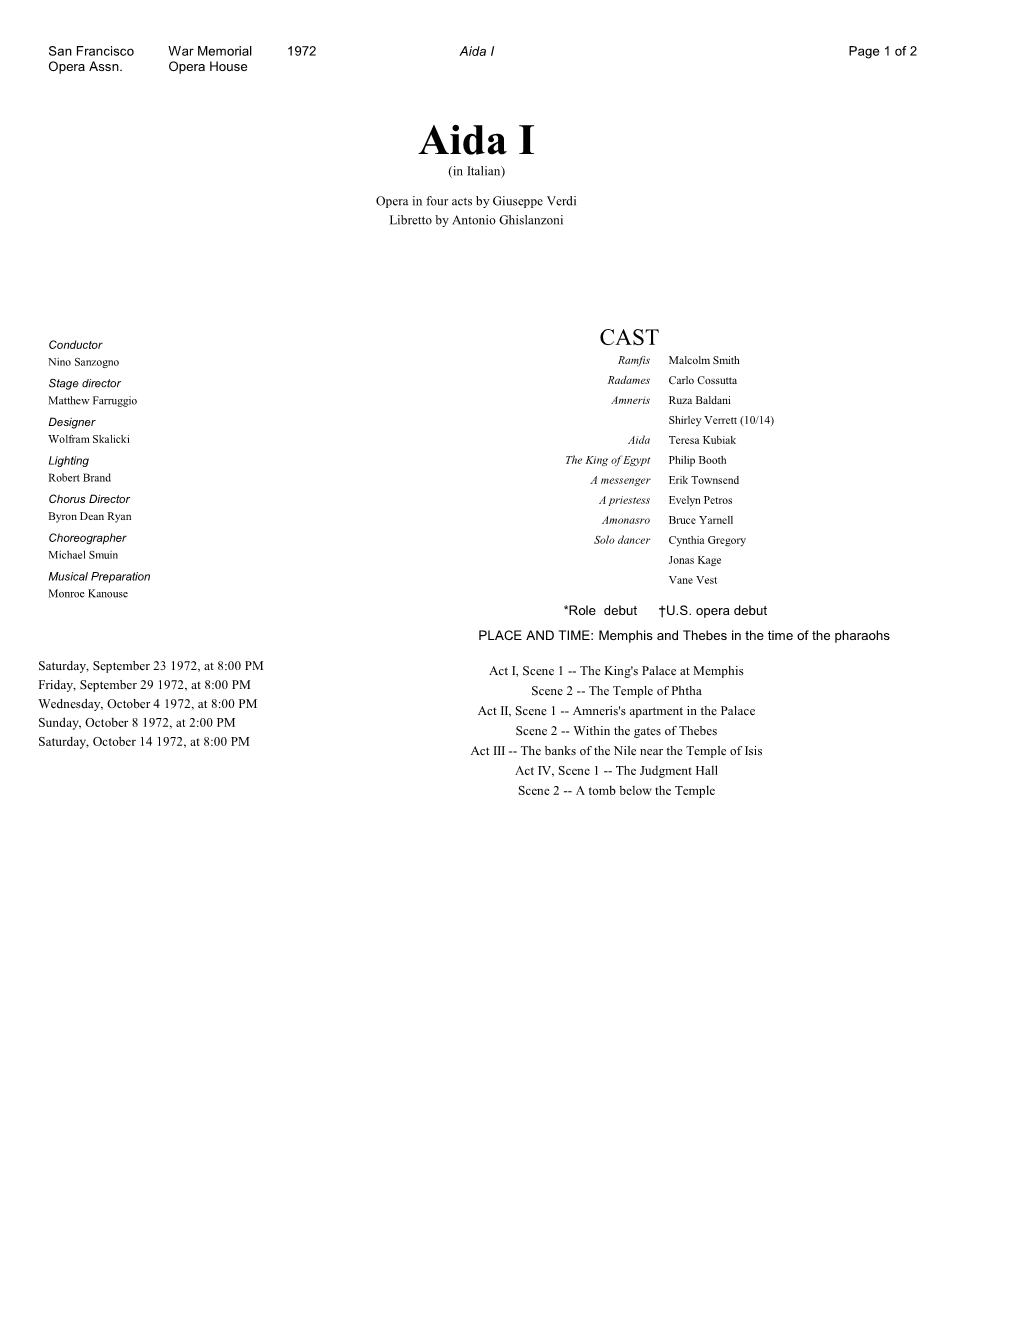 Aida I Page 1 of 2 Opera Assn